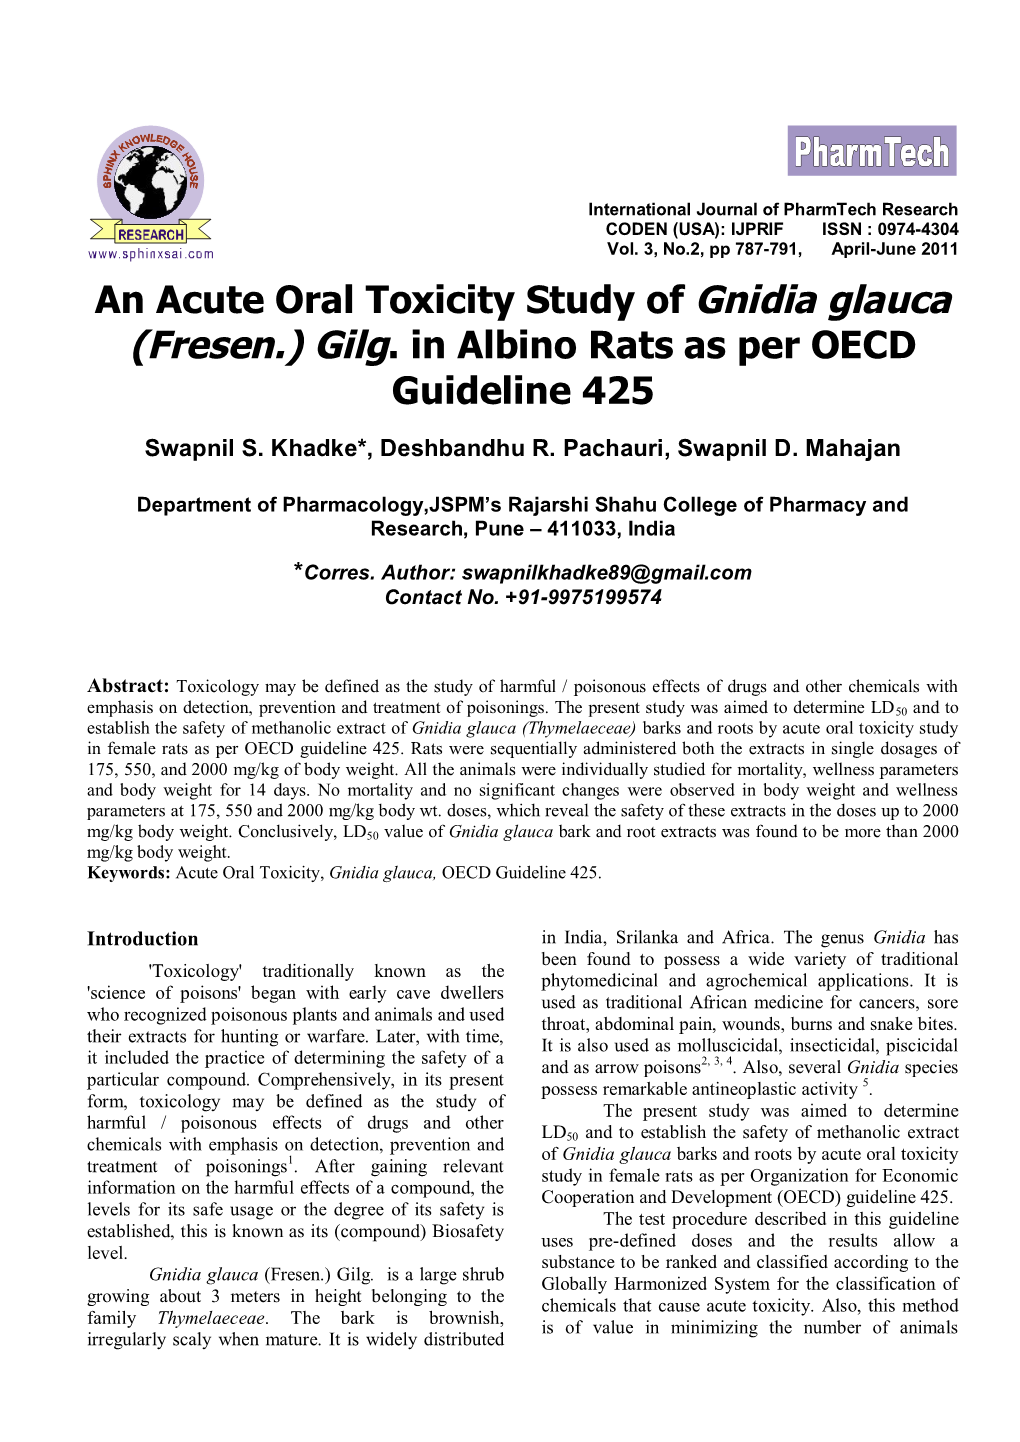 An Acute Oral Toxicity Study of Gnidia Glauca (Fresen.) Gilg